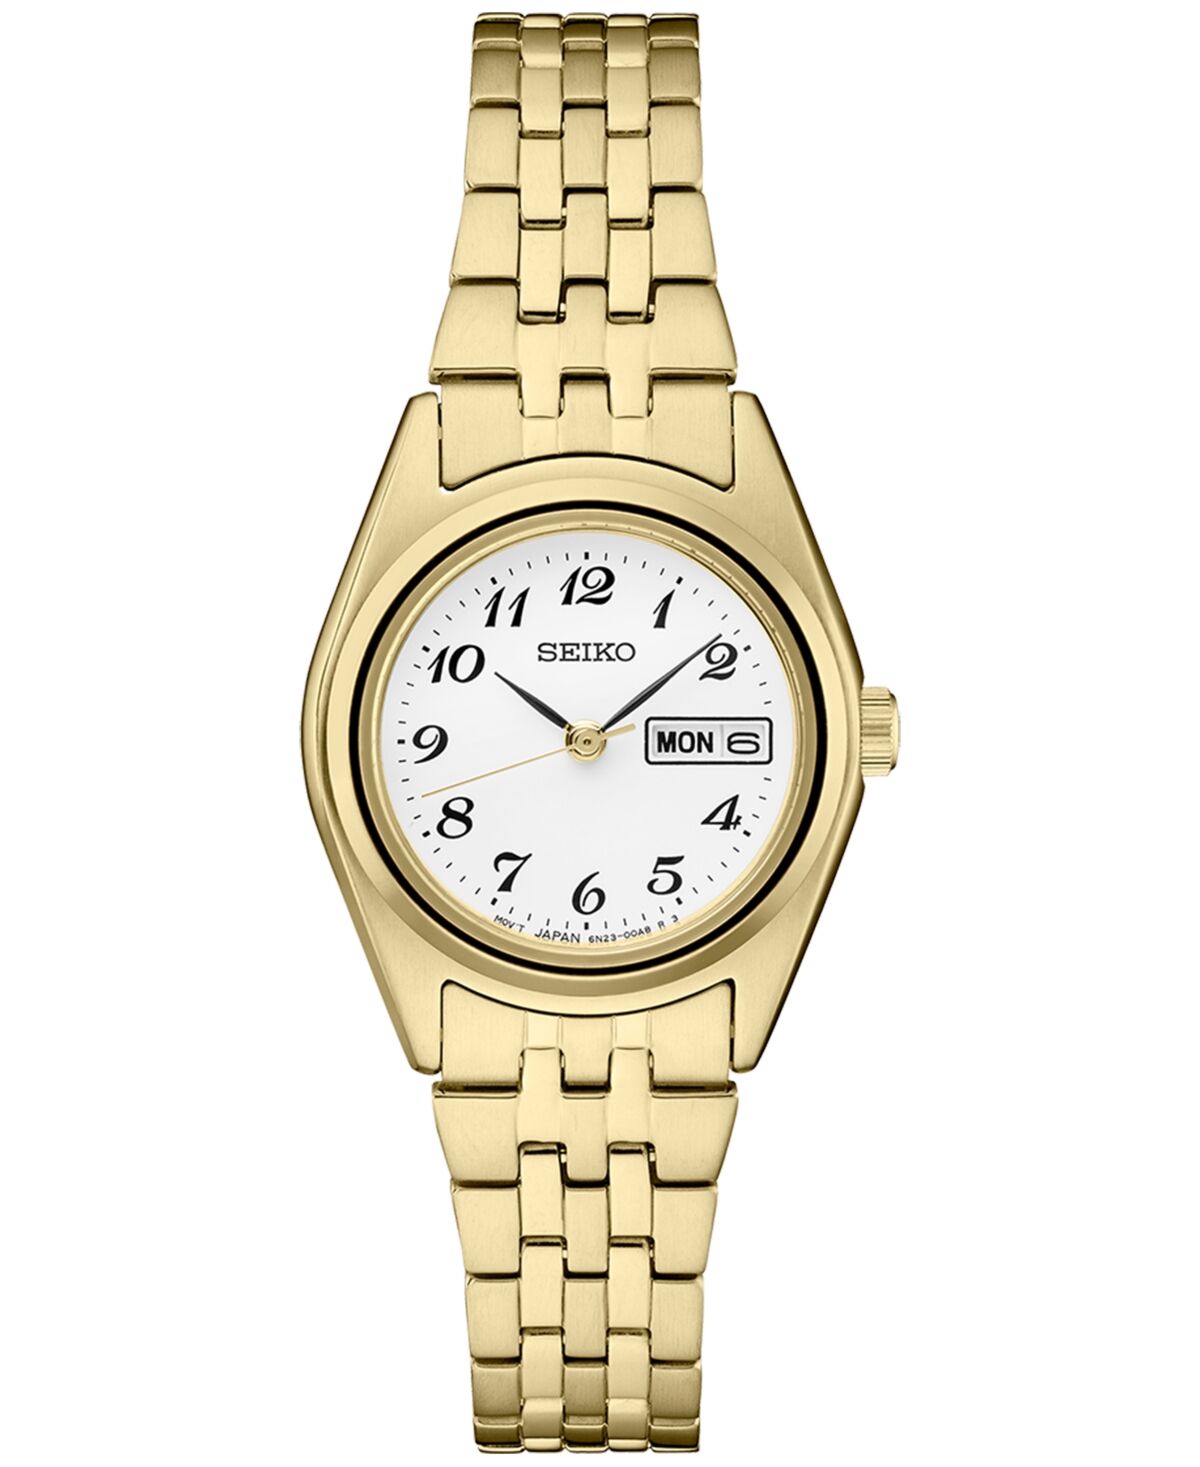 Seiko Women's Analog Essentials Gold-Tone Stainless Steel Bracelet Watch 25mm - White